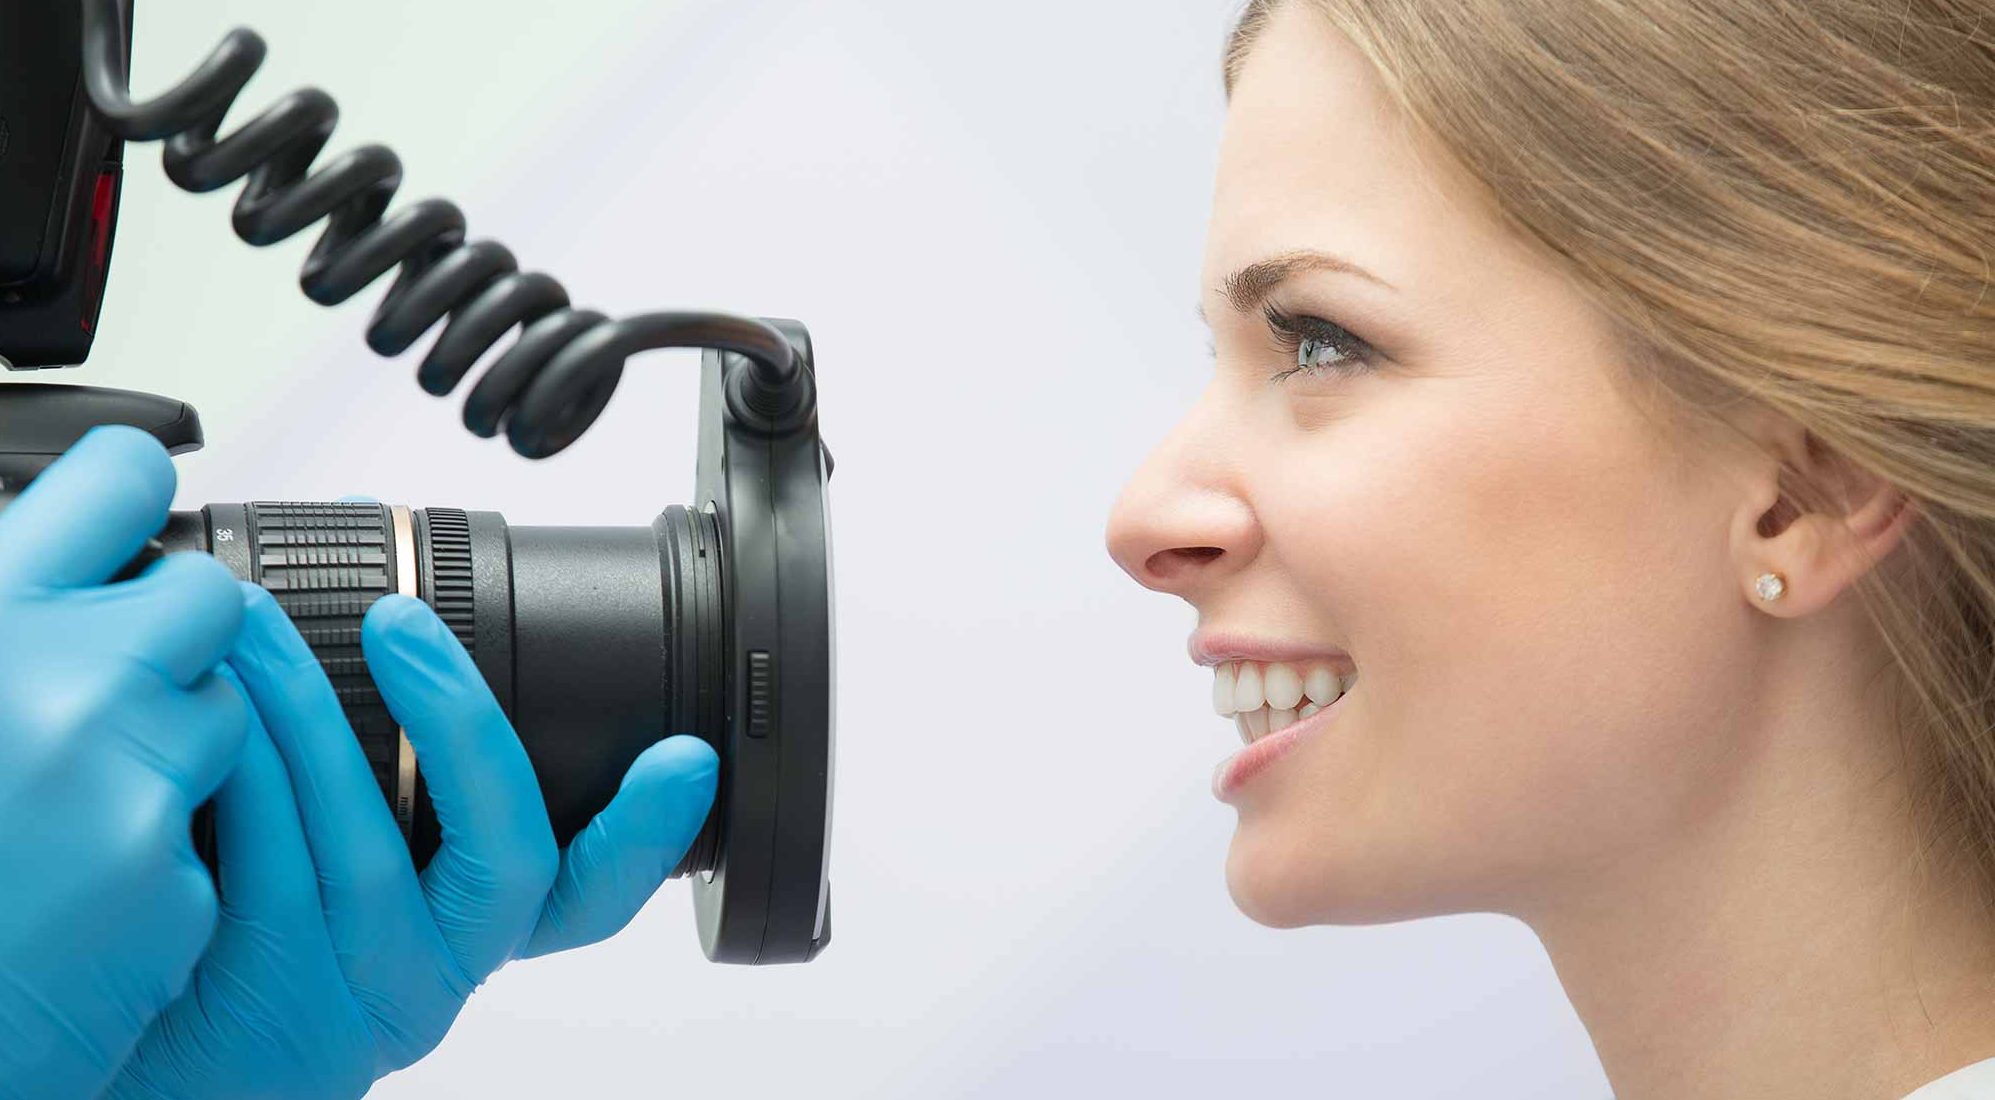 James Goolnik explains how dental photography has changed dentistry for him